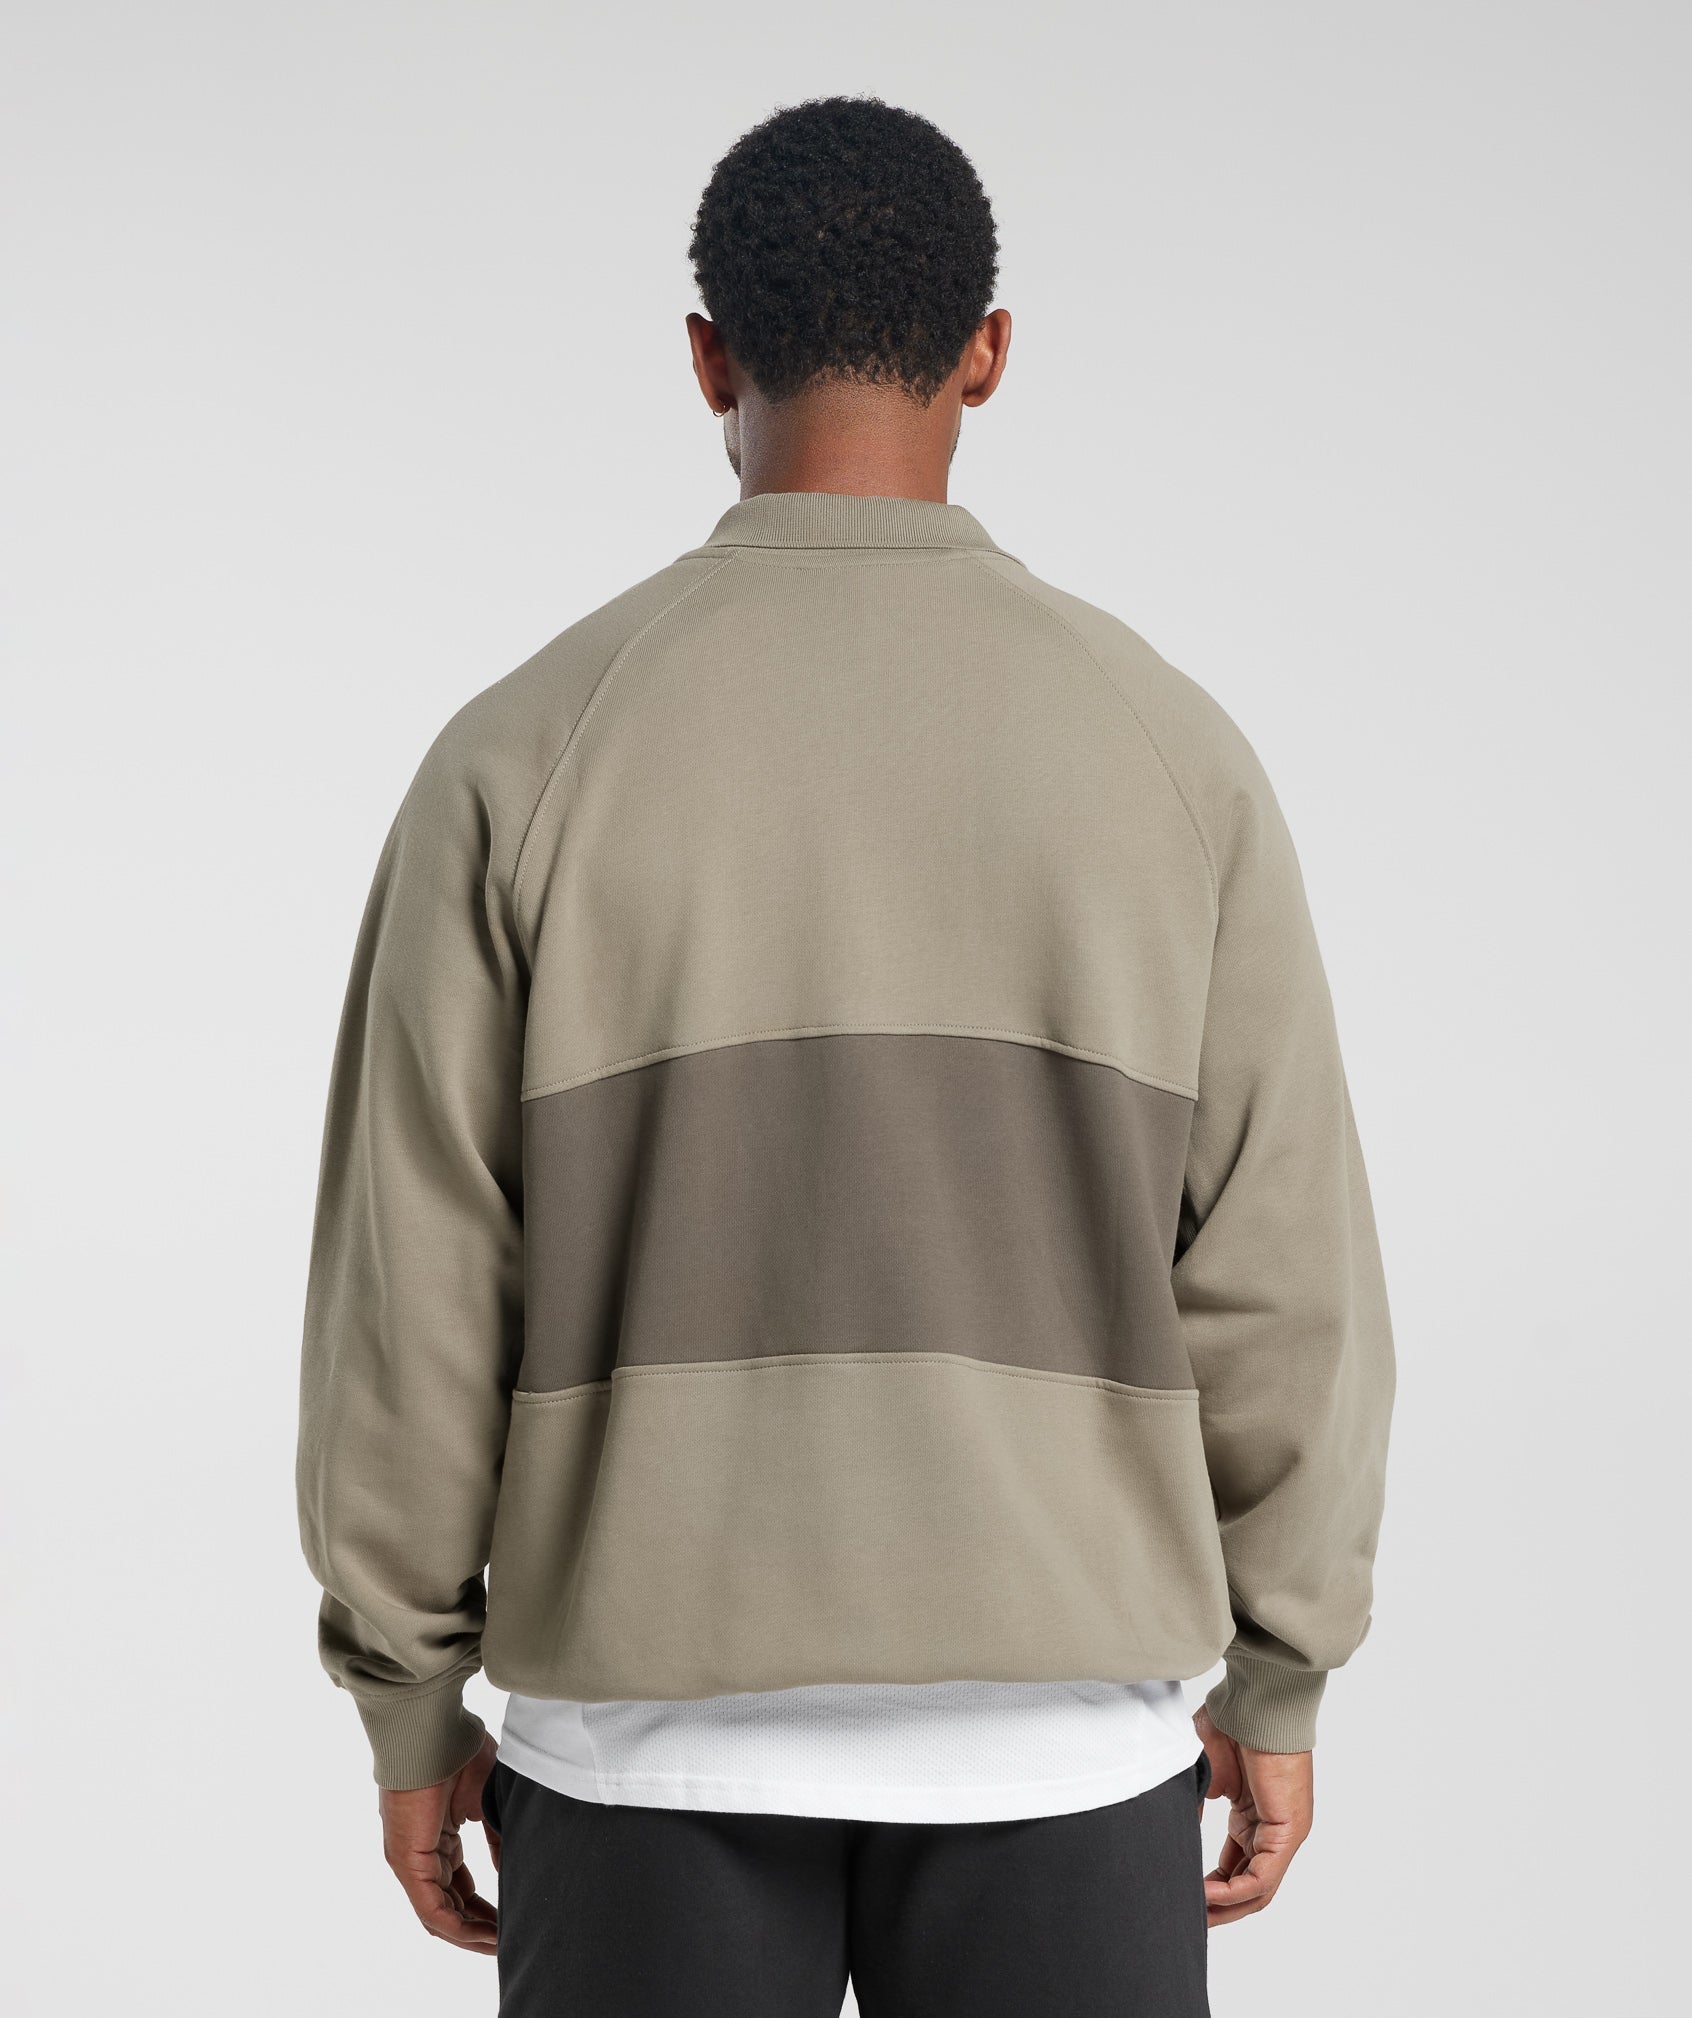 Rest Day Essentials Sweatshirt Polo in Linen Brown/Camo Brown - view 2